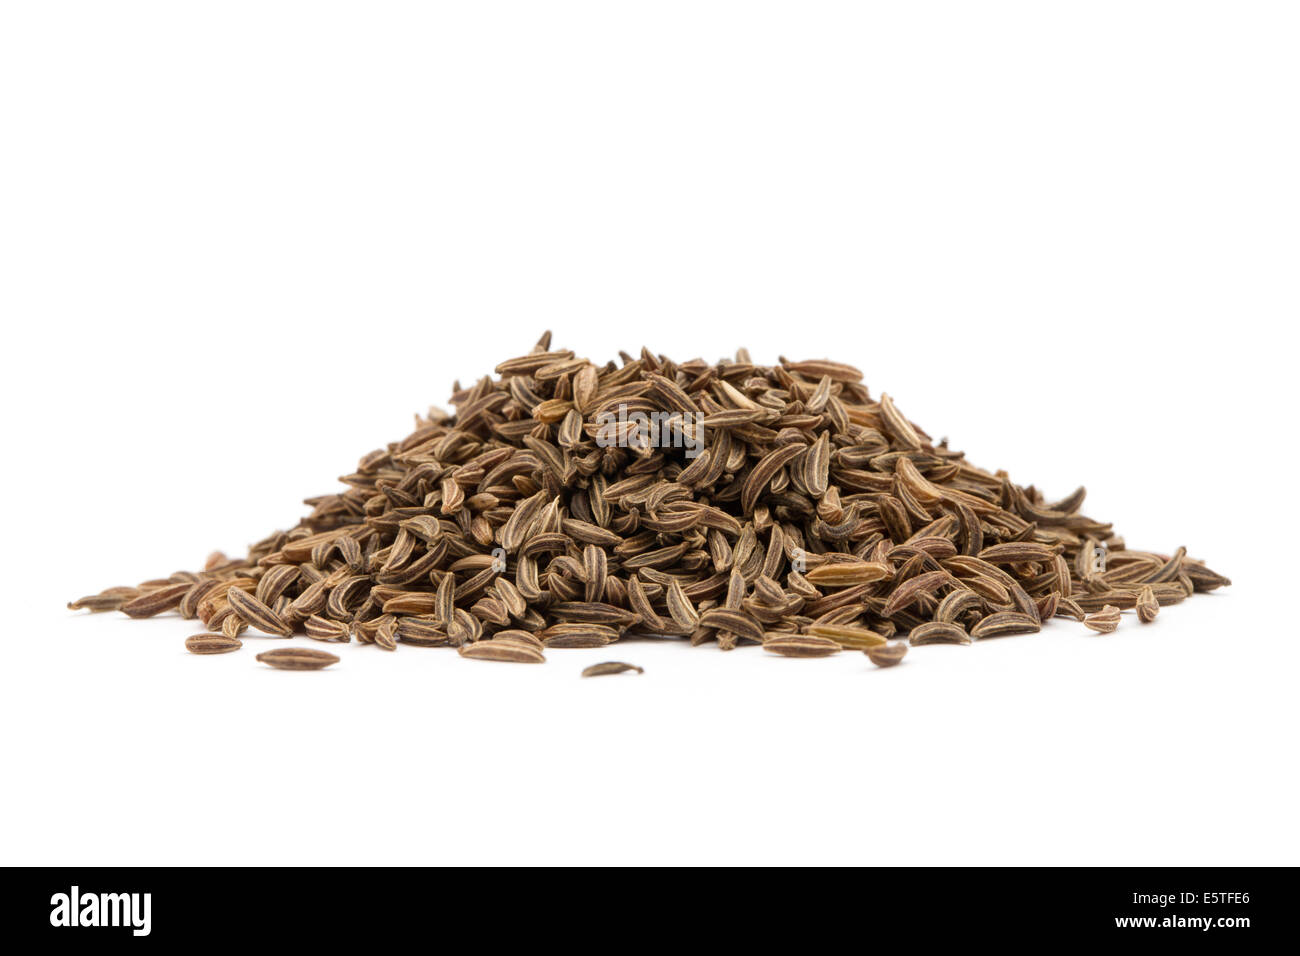 Pile of cumin seeds isolated on white background Stock Photo